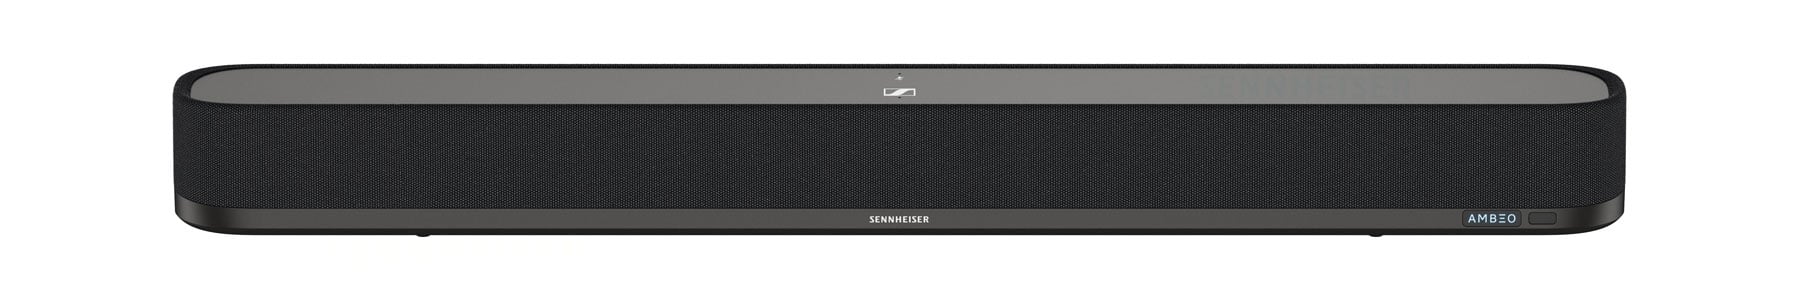 Sennheiser AMBEO Mini Soundbar - front view